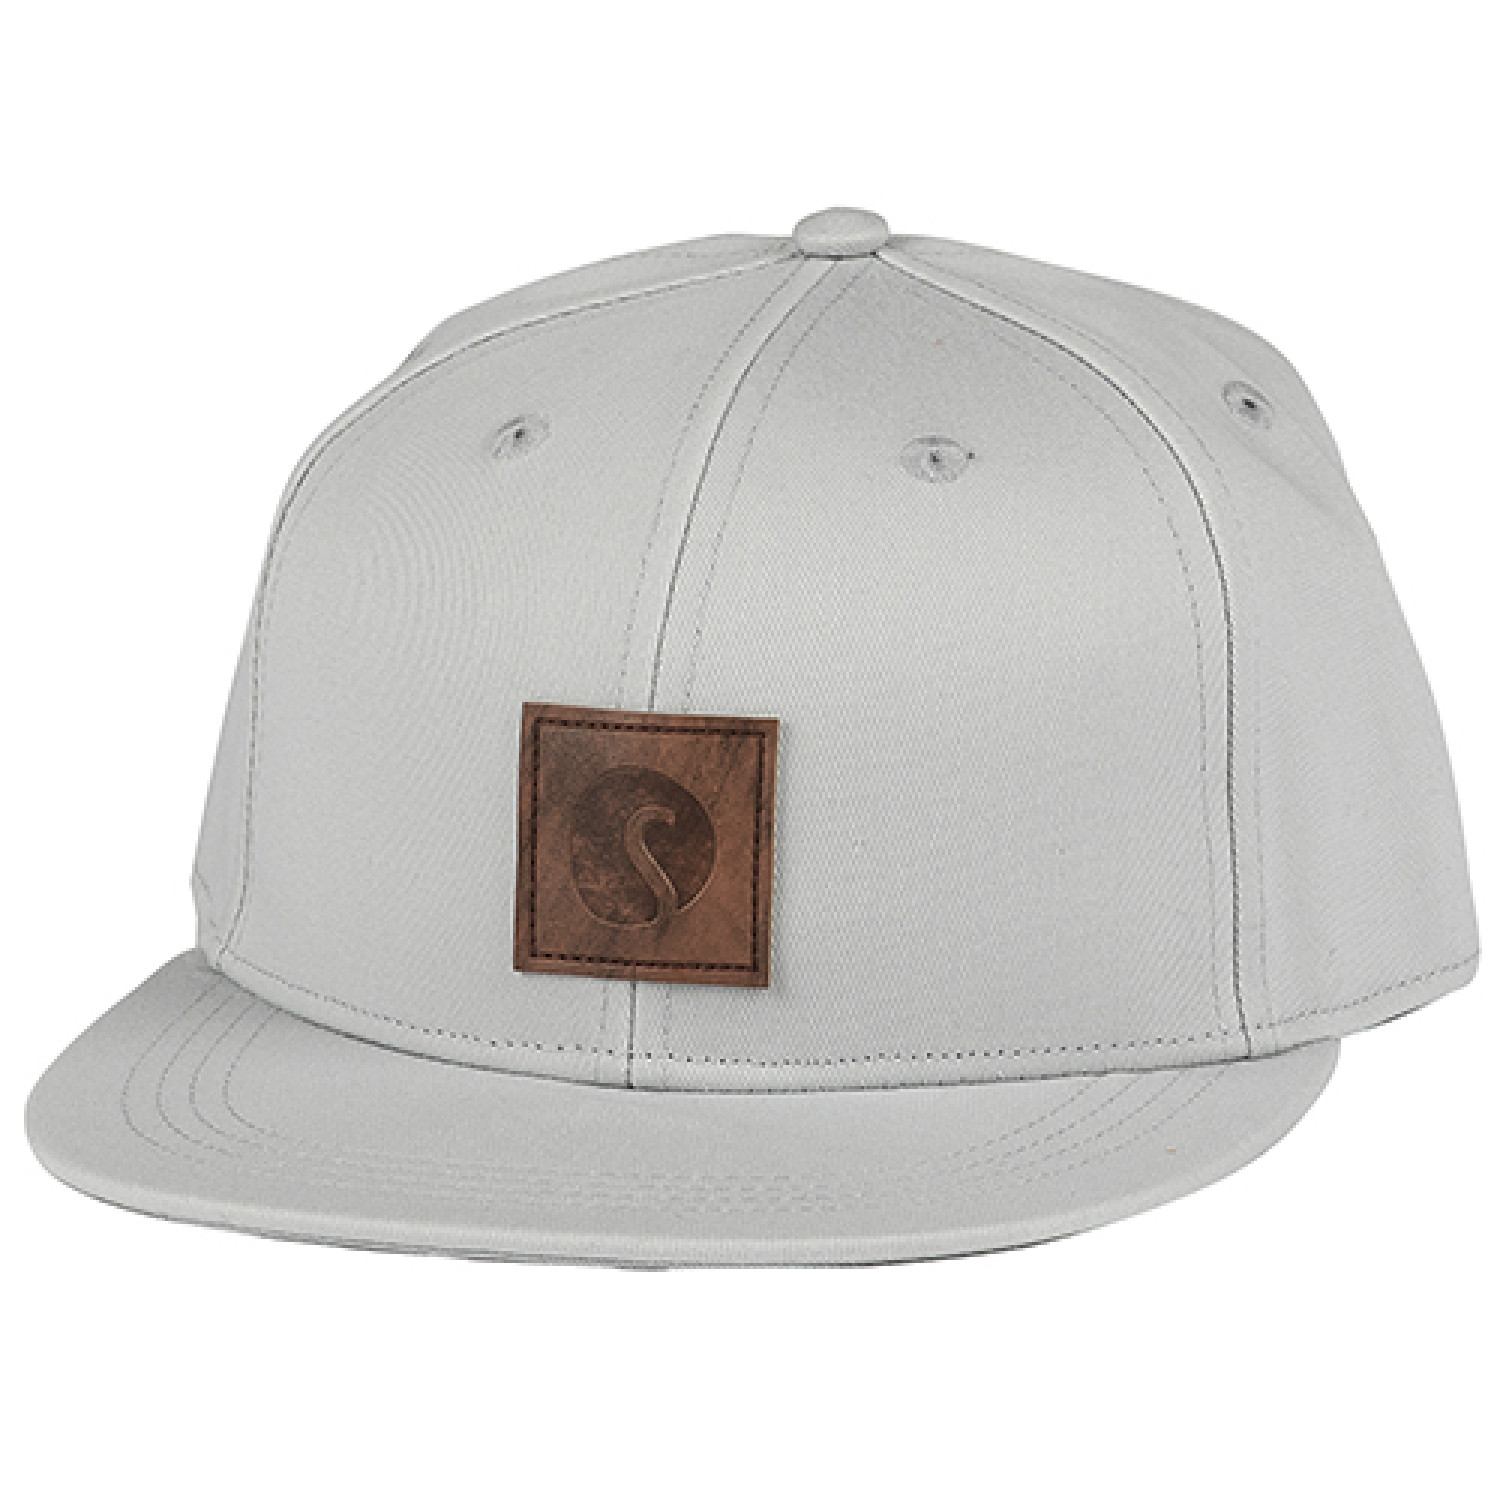 Lippalakki Baseball cap flat fitted